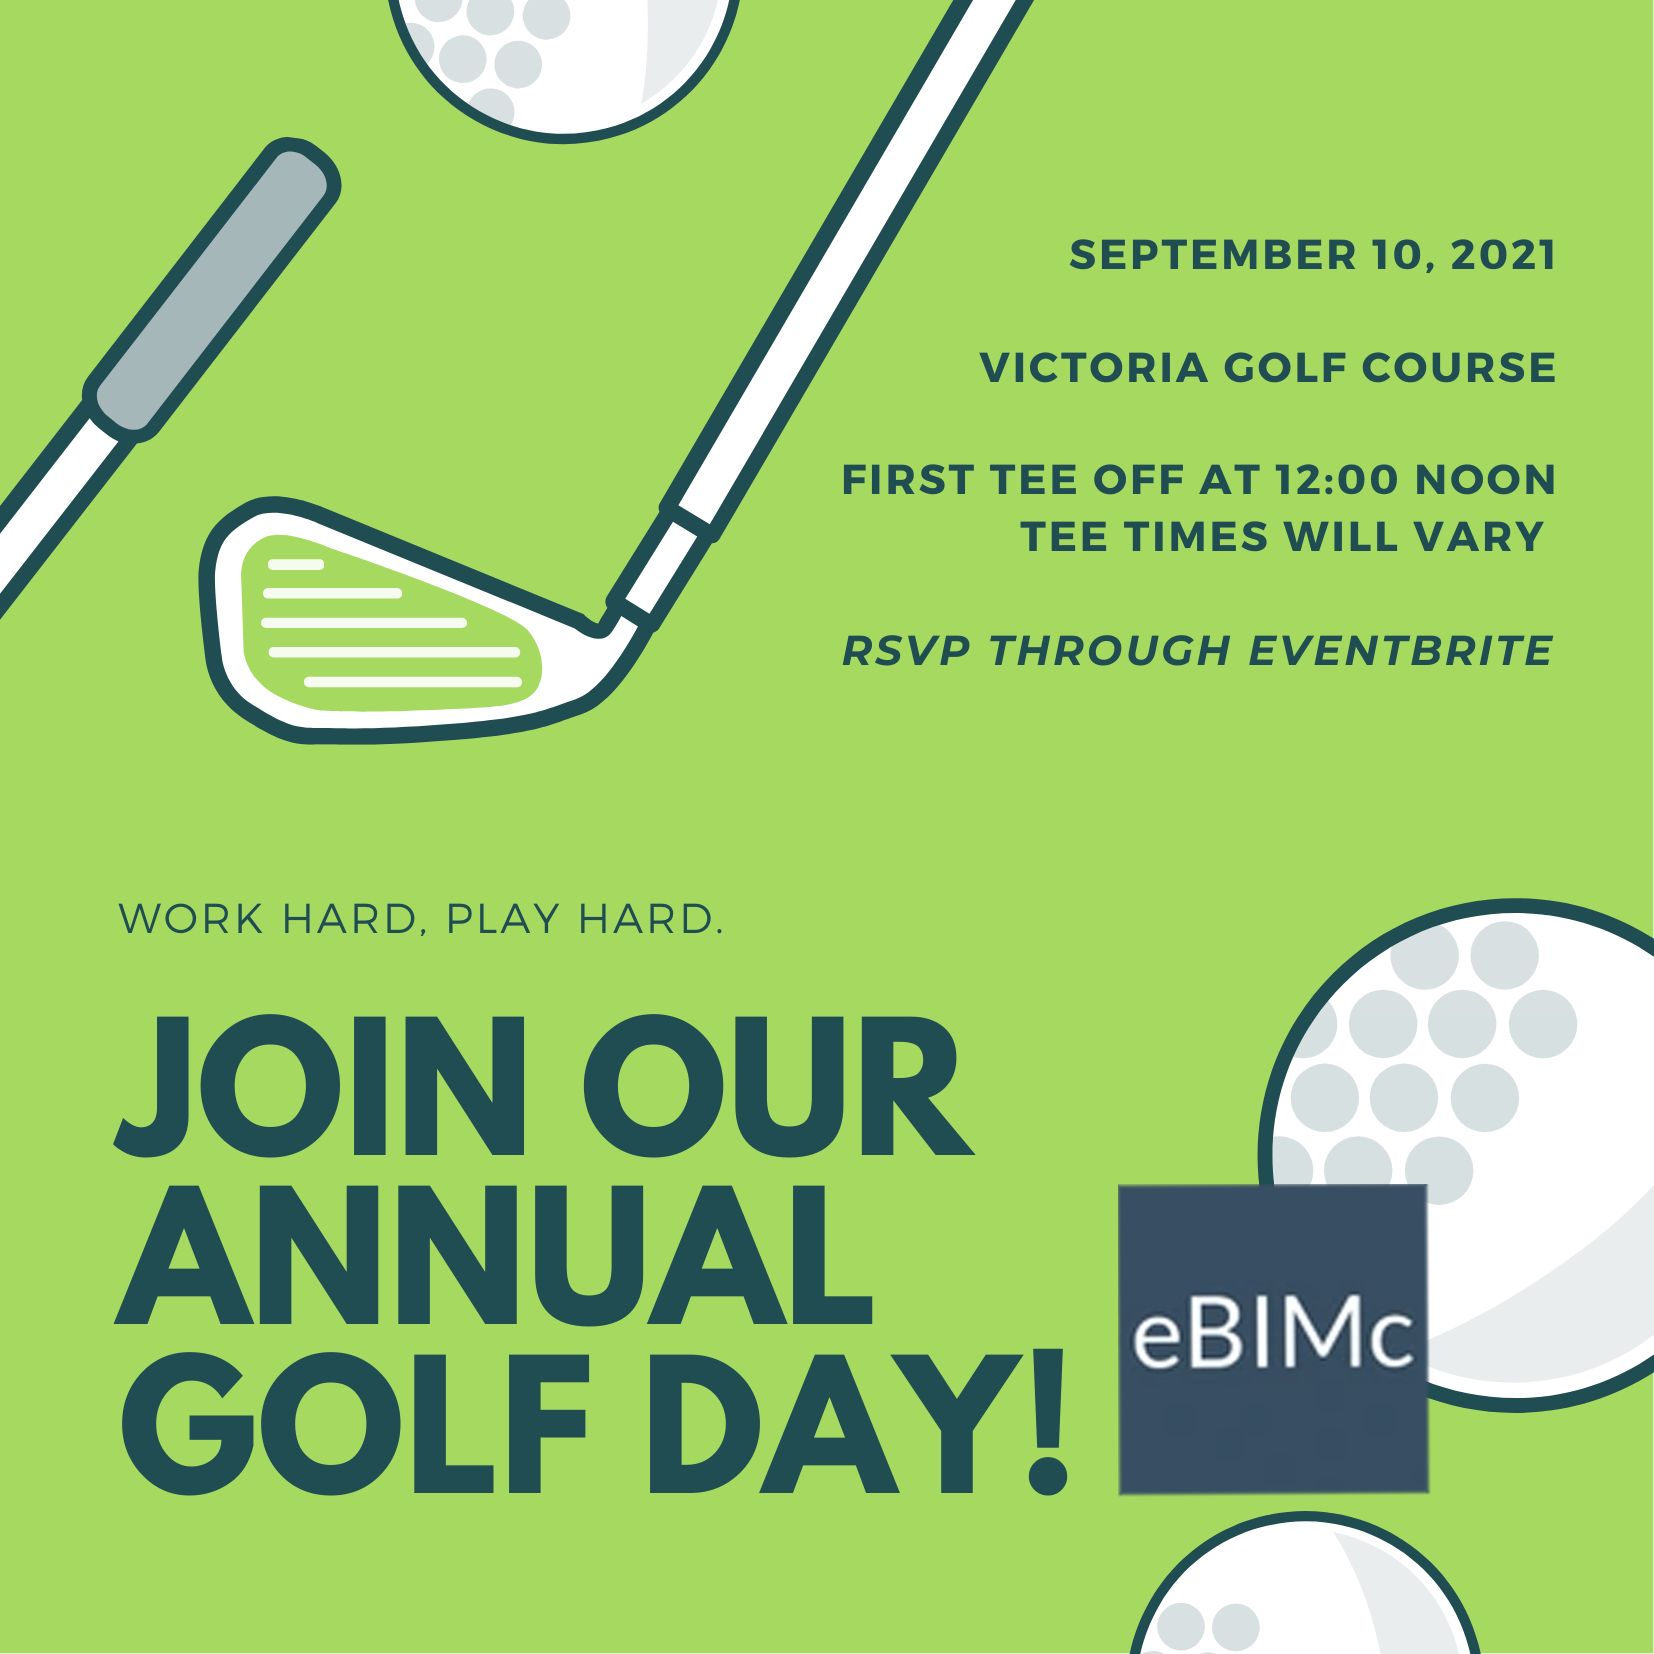 eBIMc (Edmonton BIM Community) Annual Golf Event